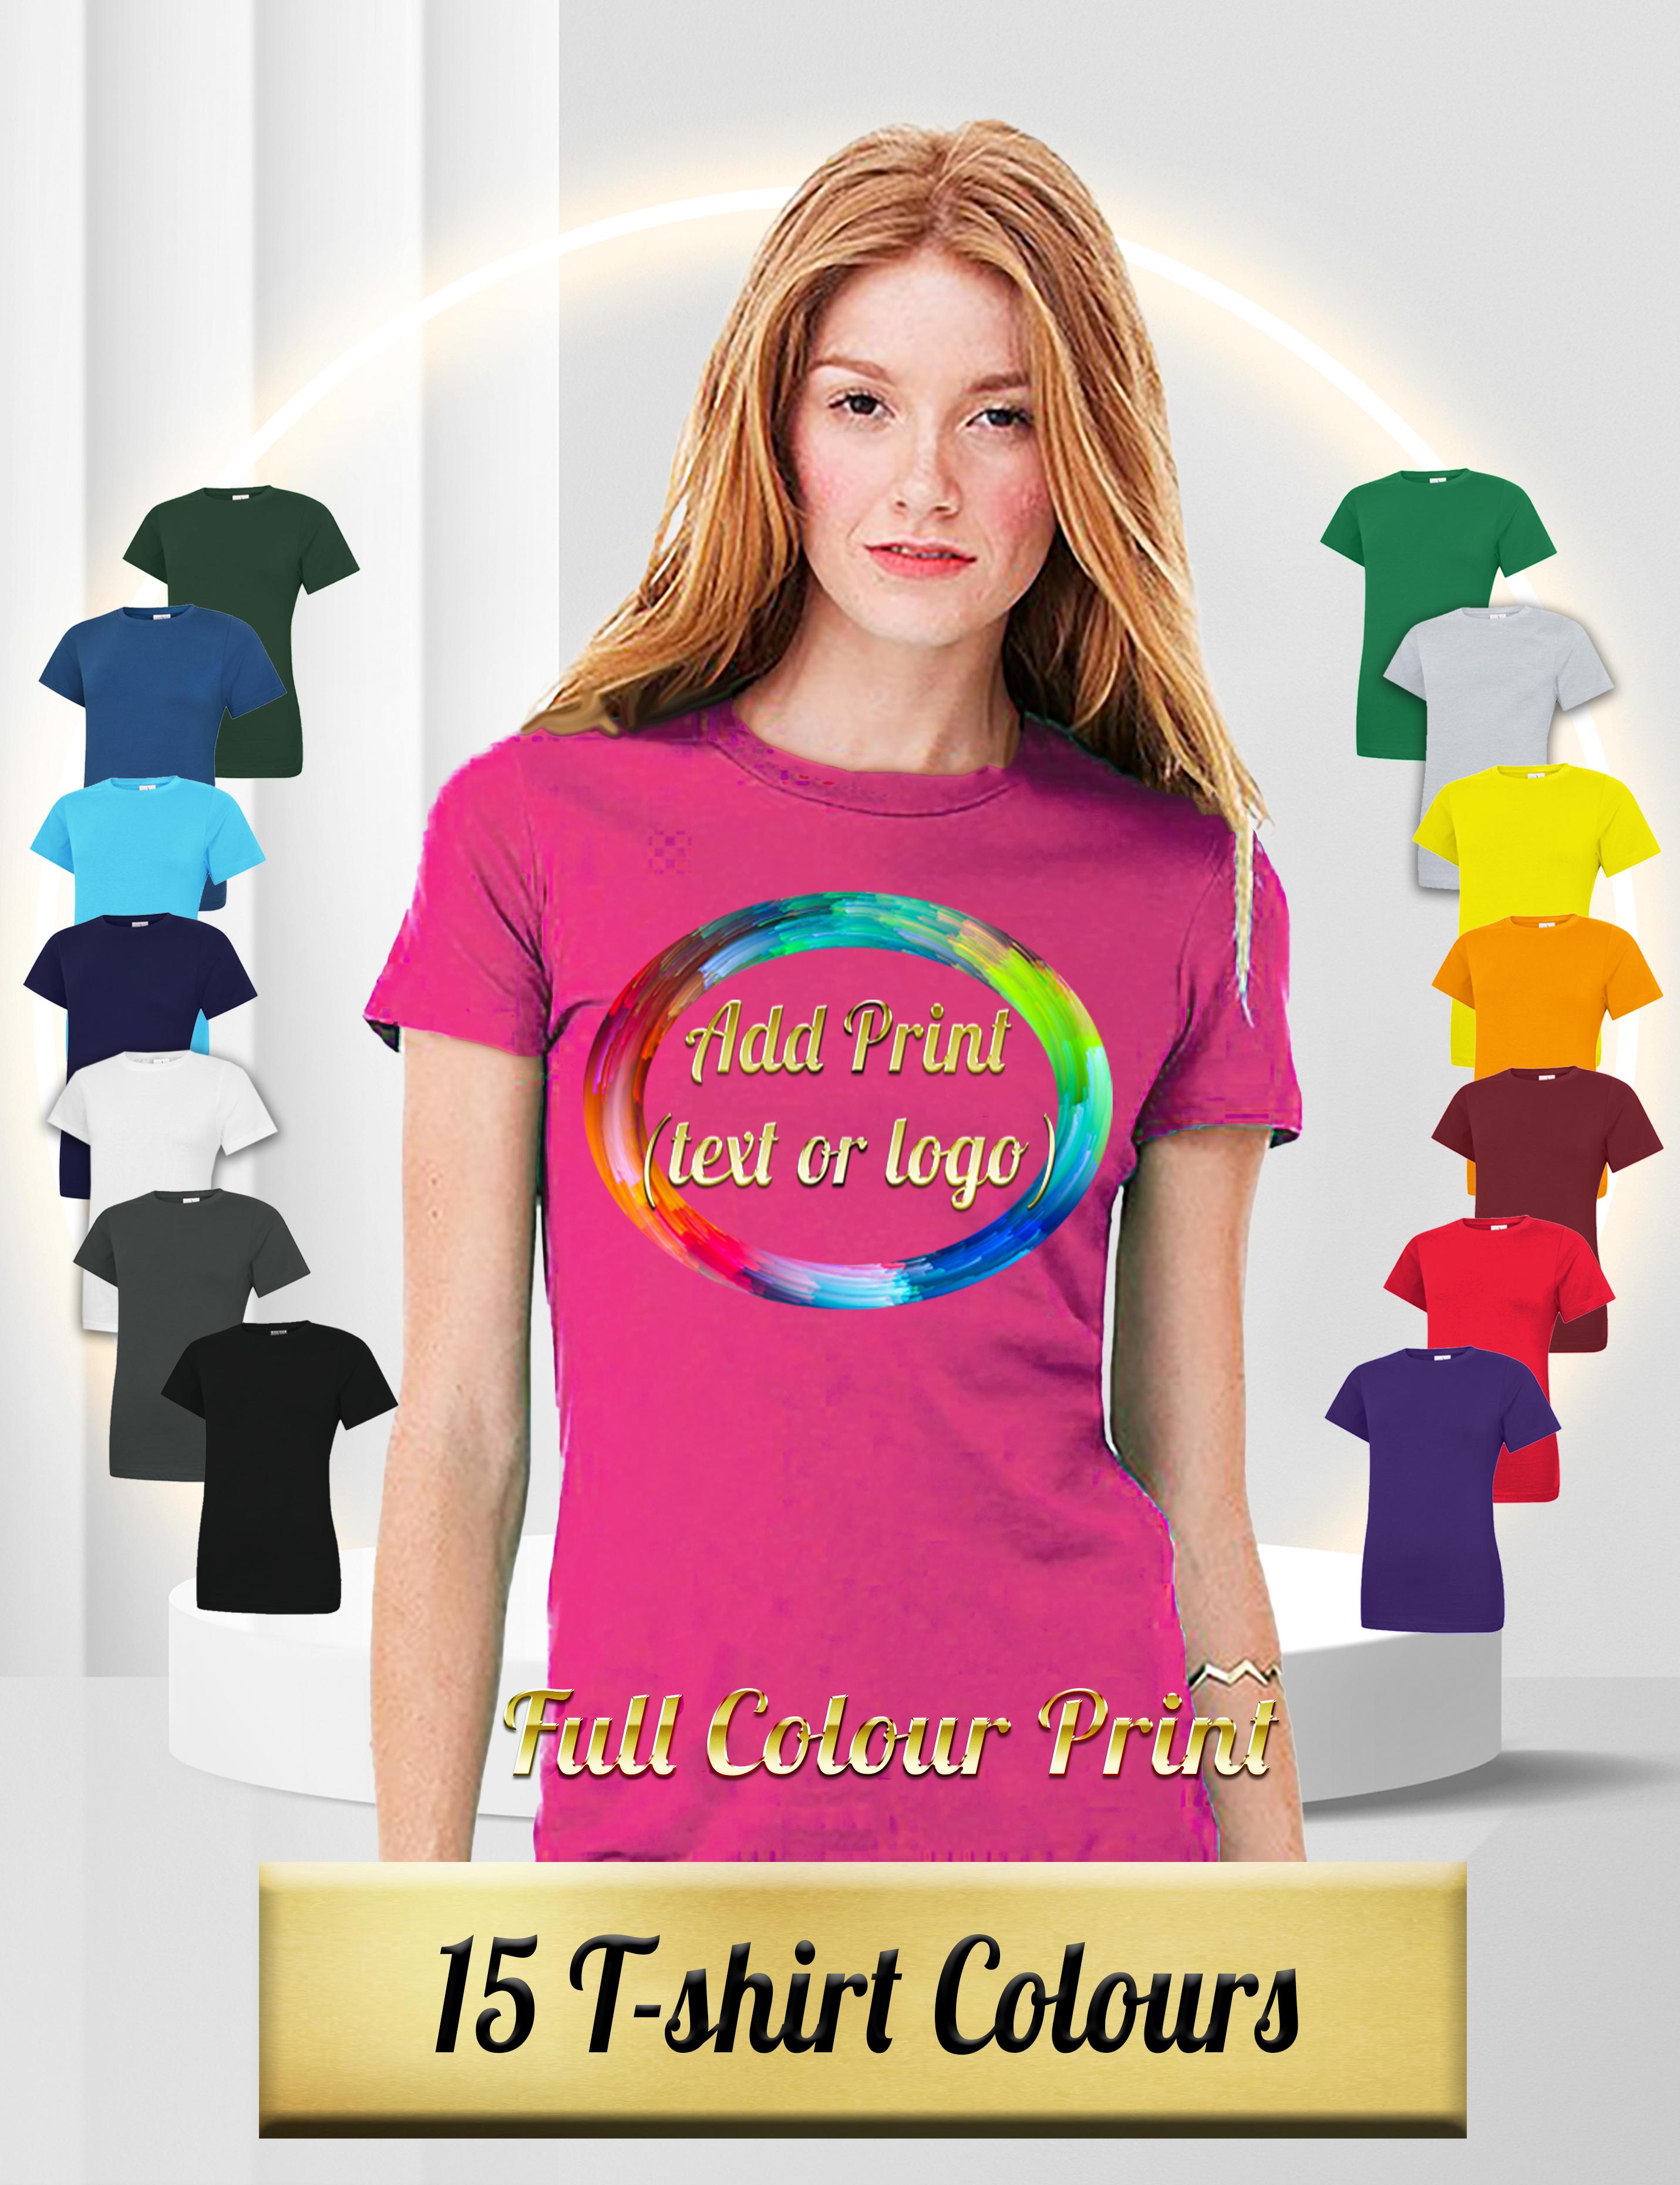 Full Colour Printed Women's T-shirt